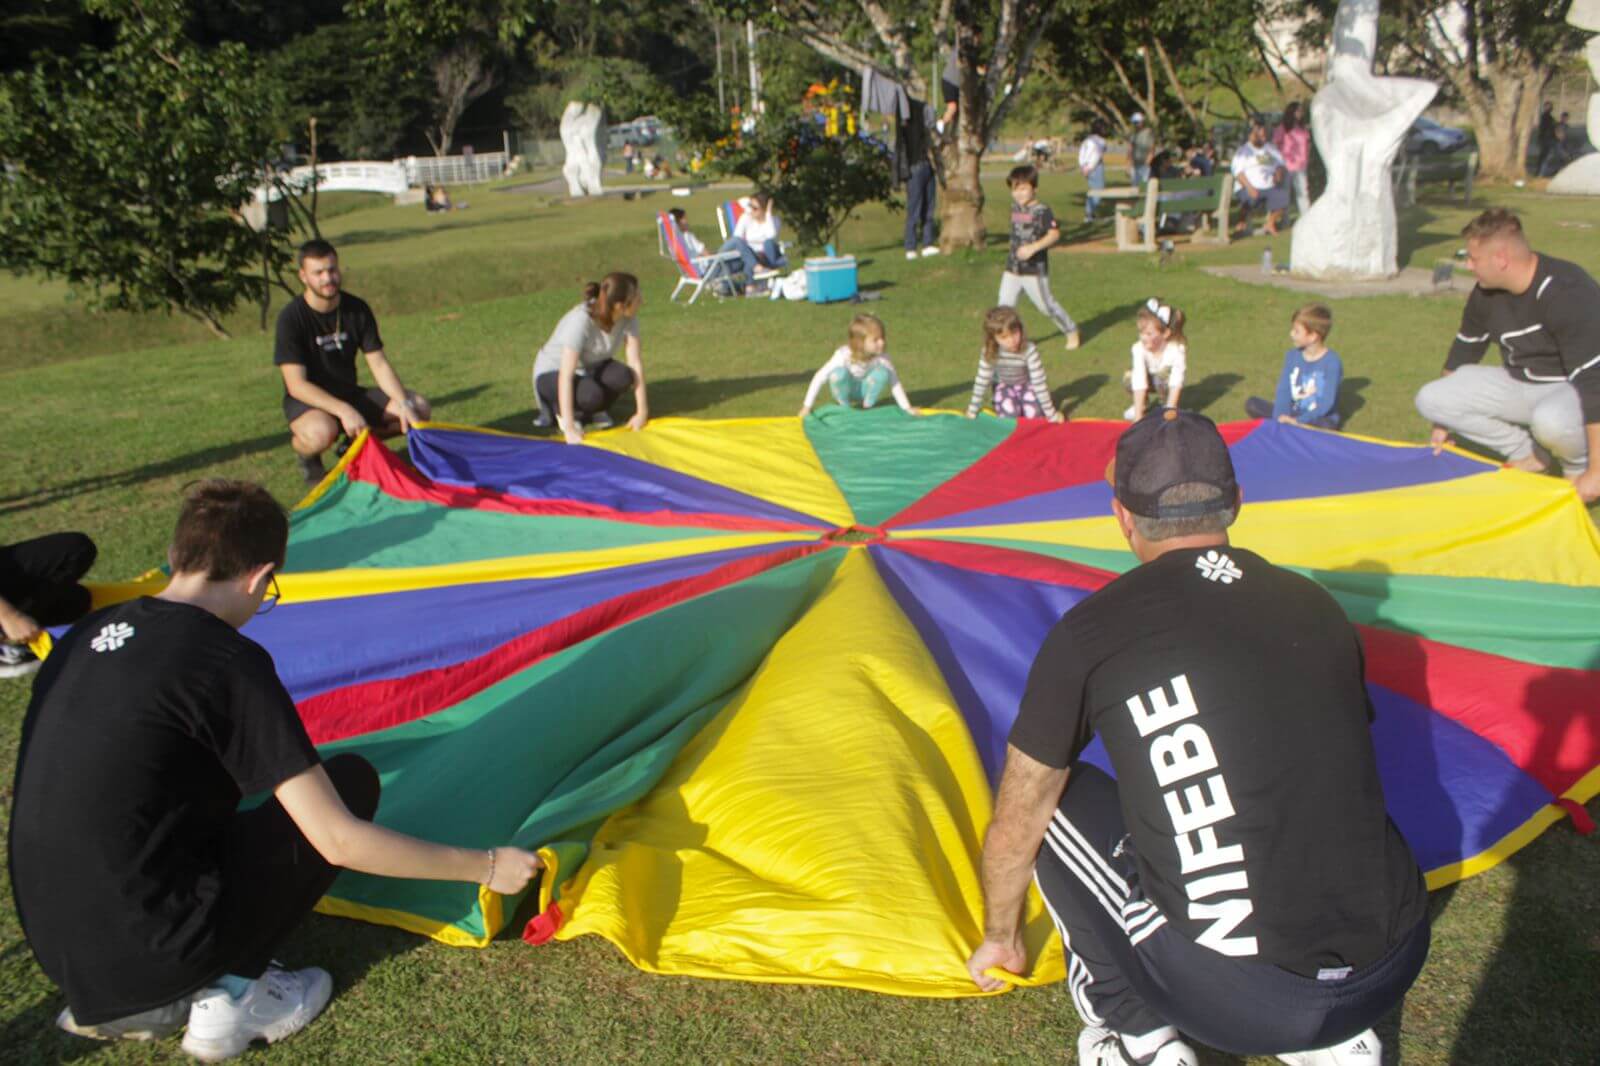 UNIFEBE no Lazer promove atividades recreativas no Parque das Esculturas